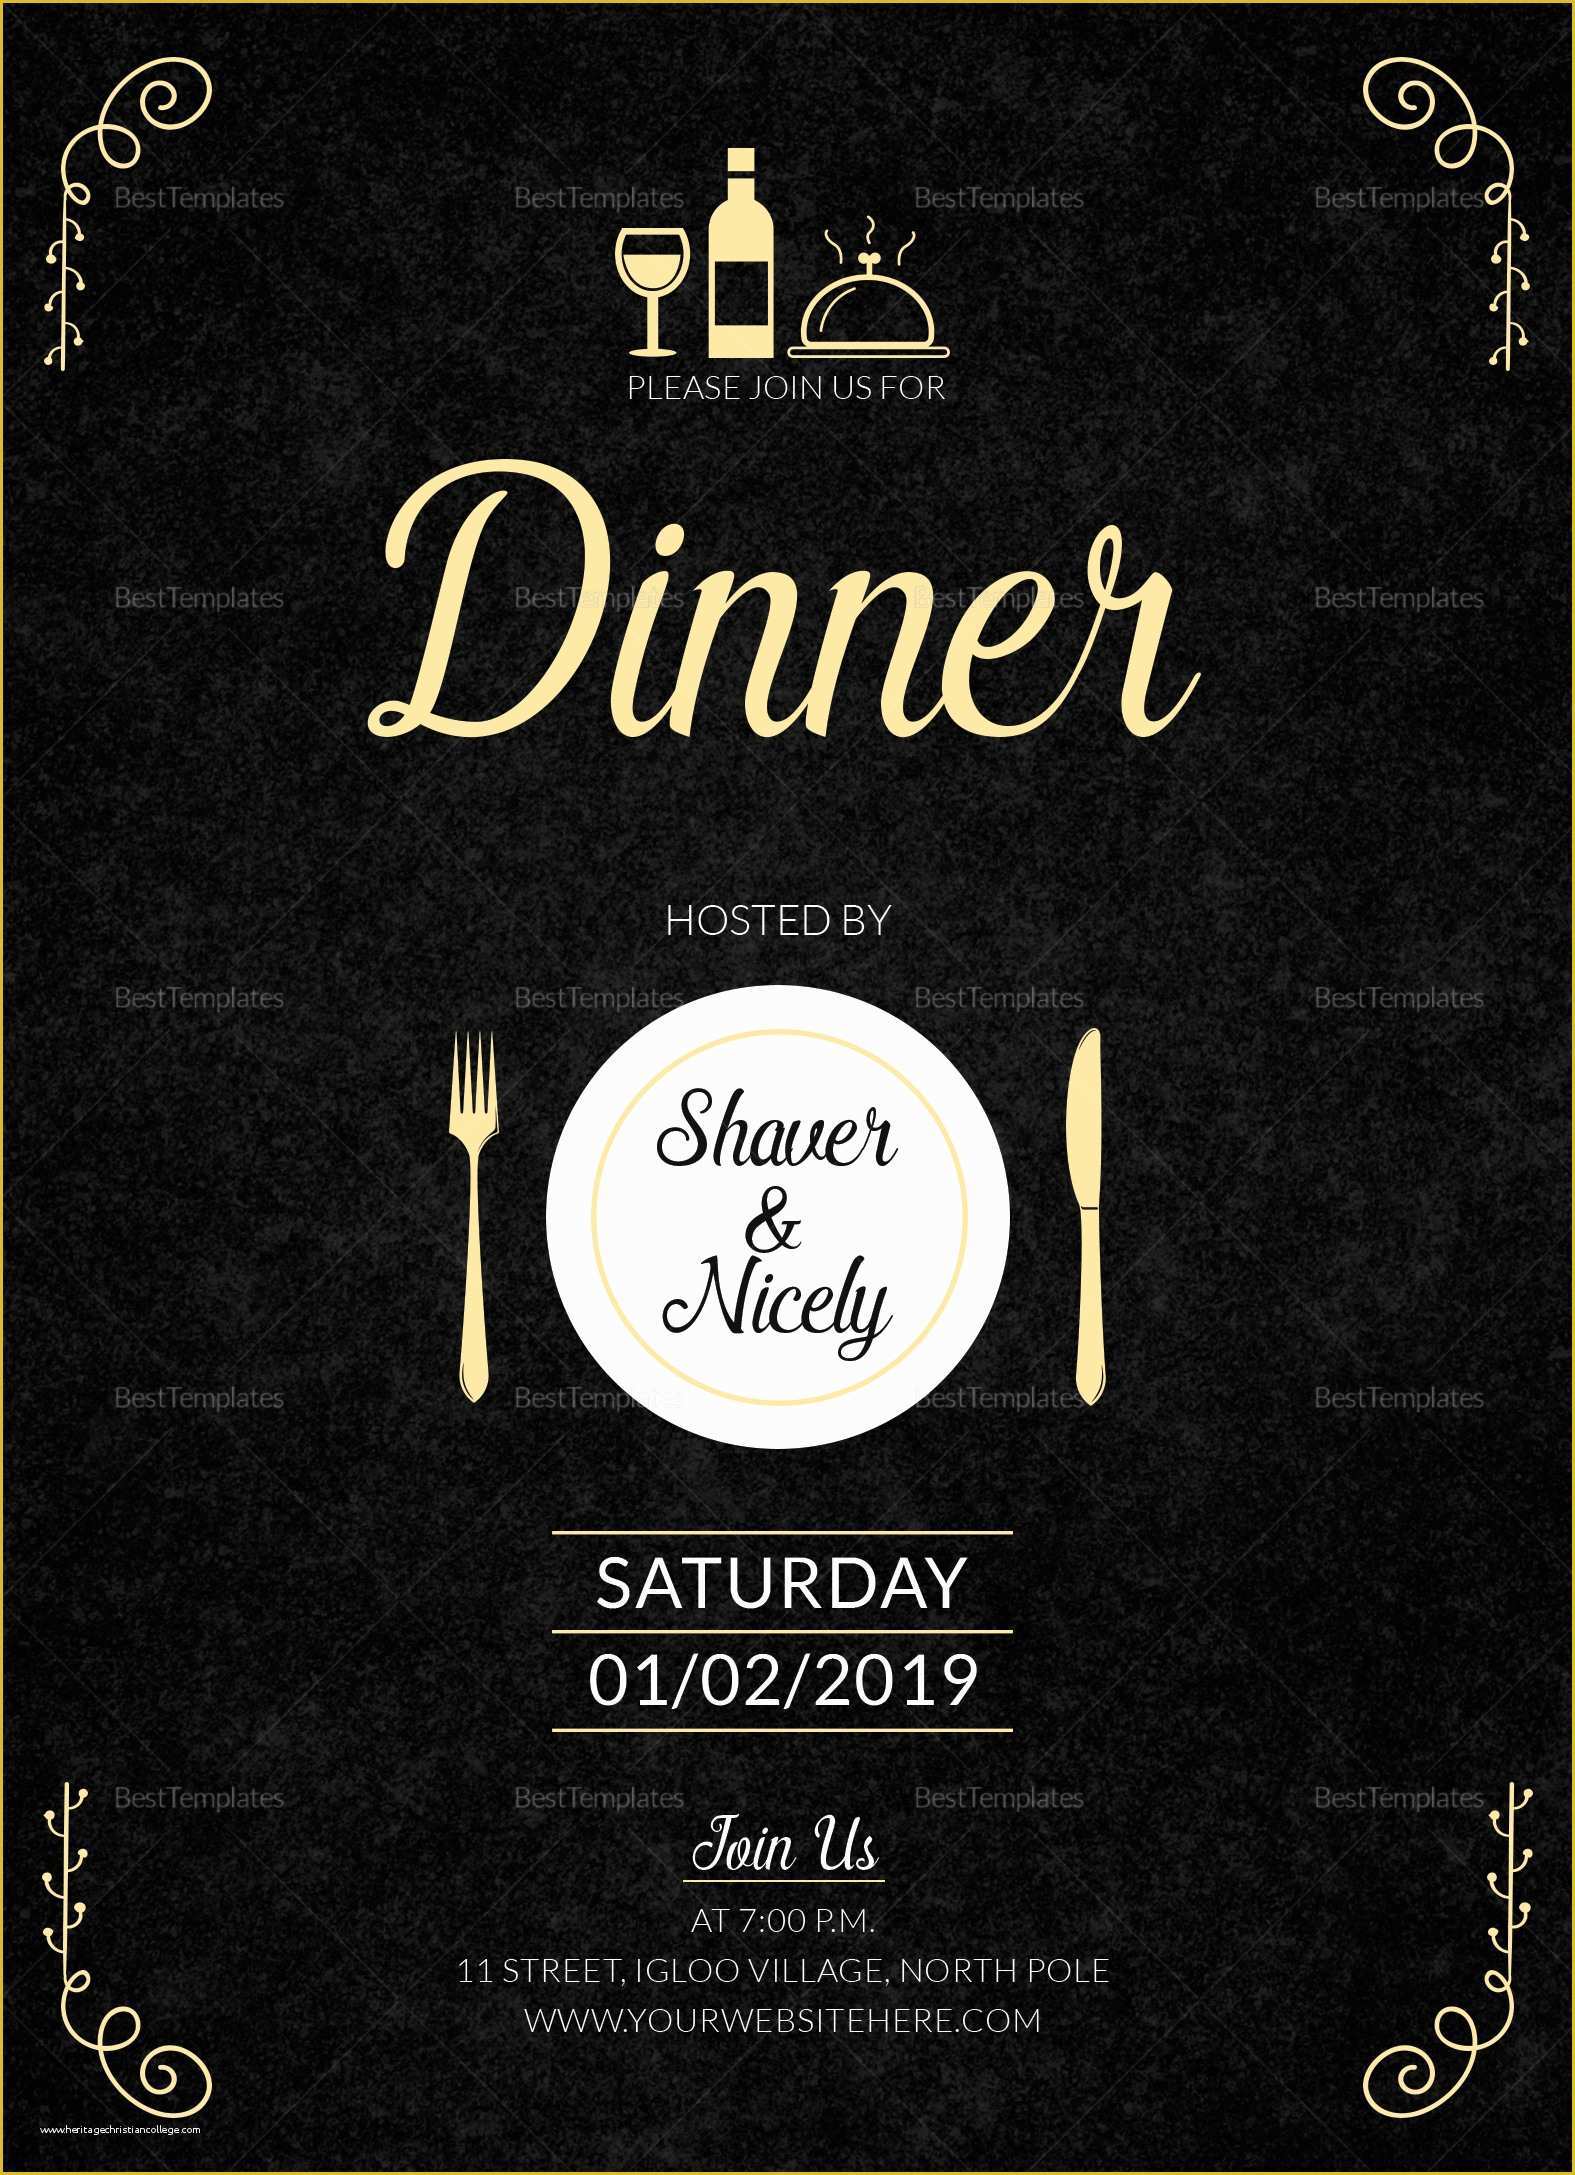 Dinner Invitation Card Template Free Of Dinner Invitation Card Design Template In Word Psd Publisher